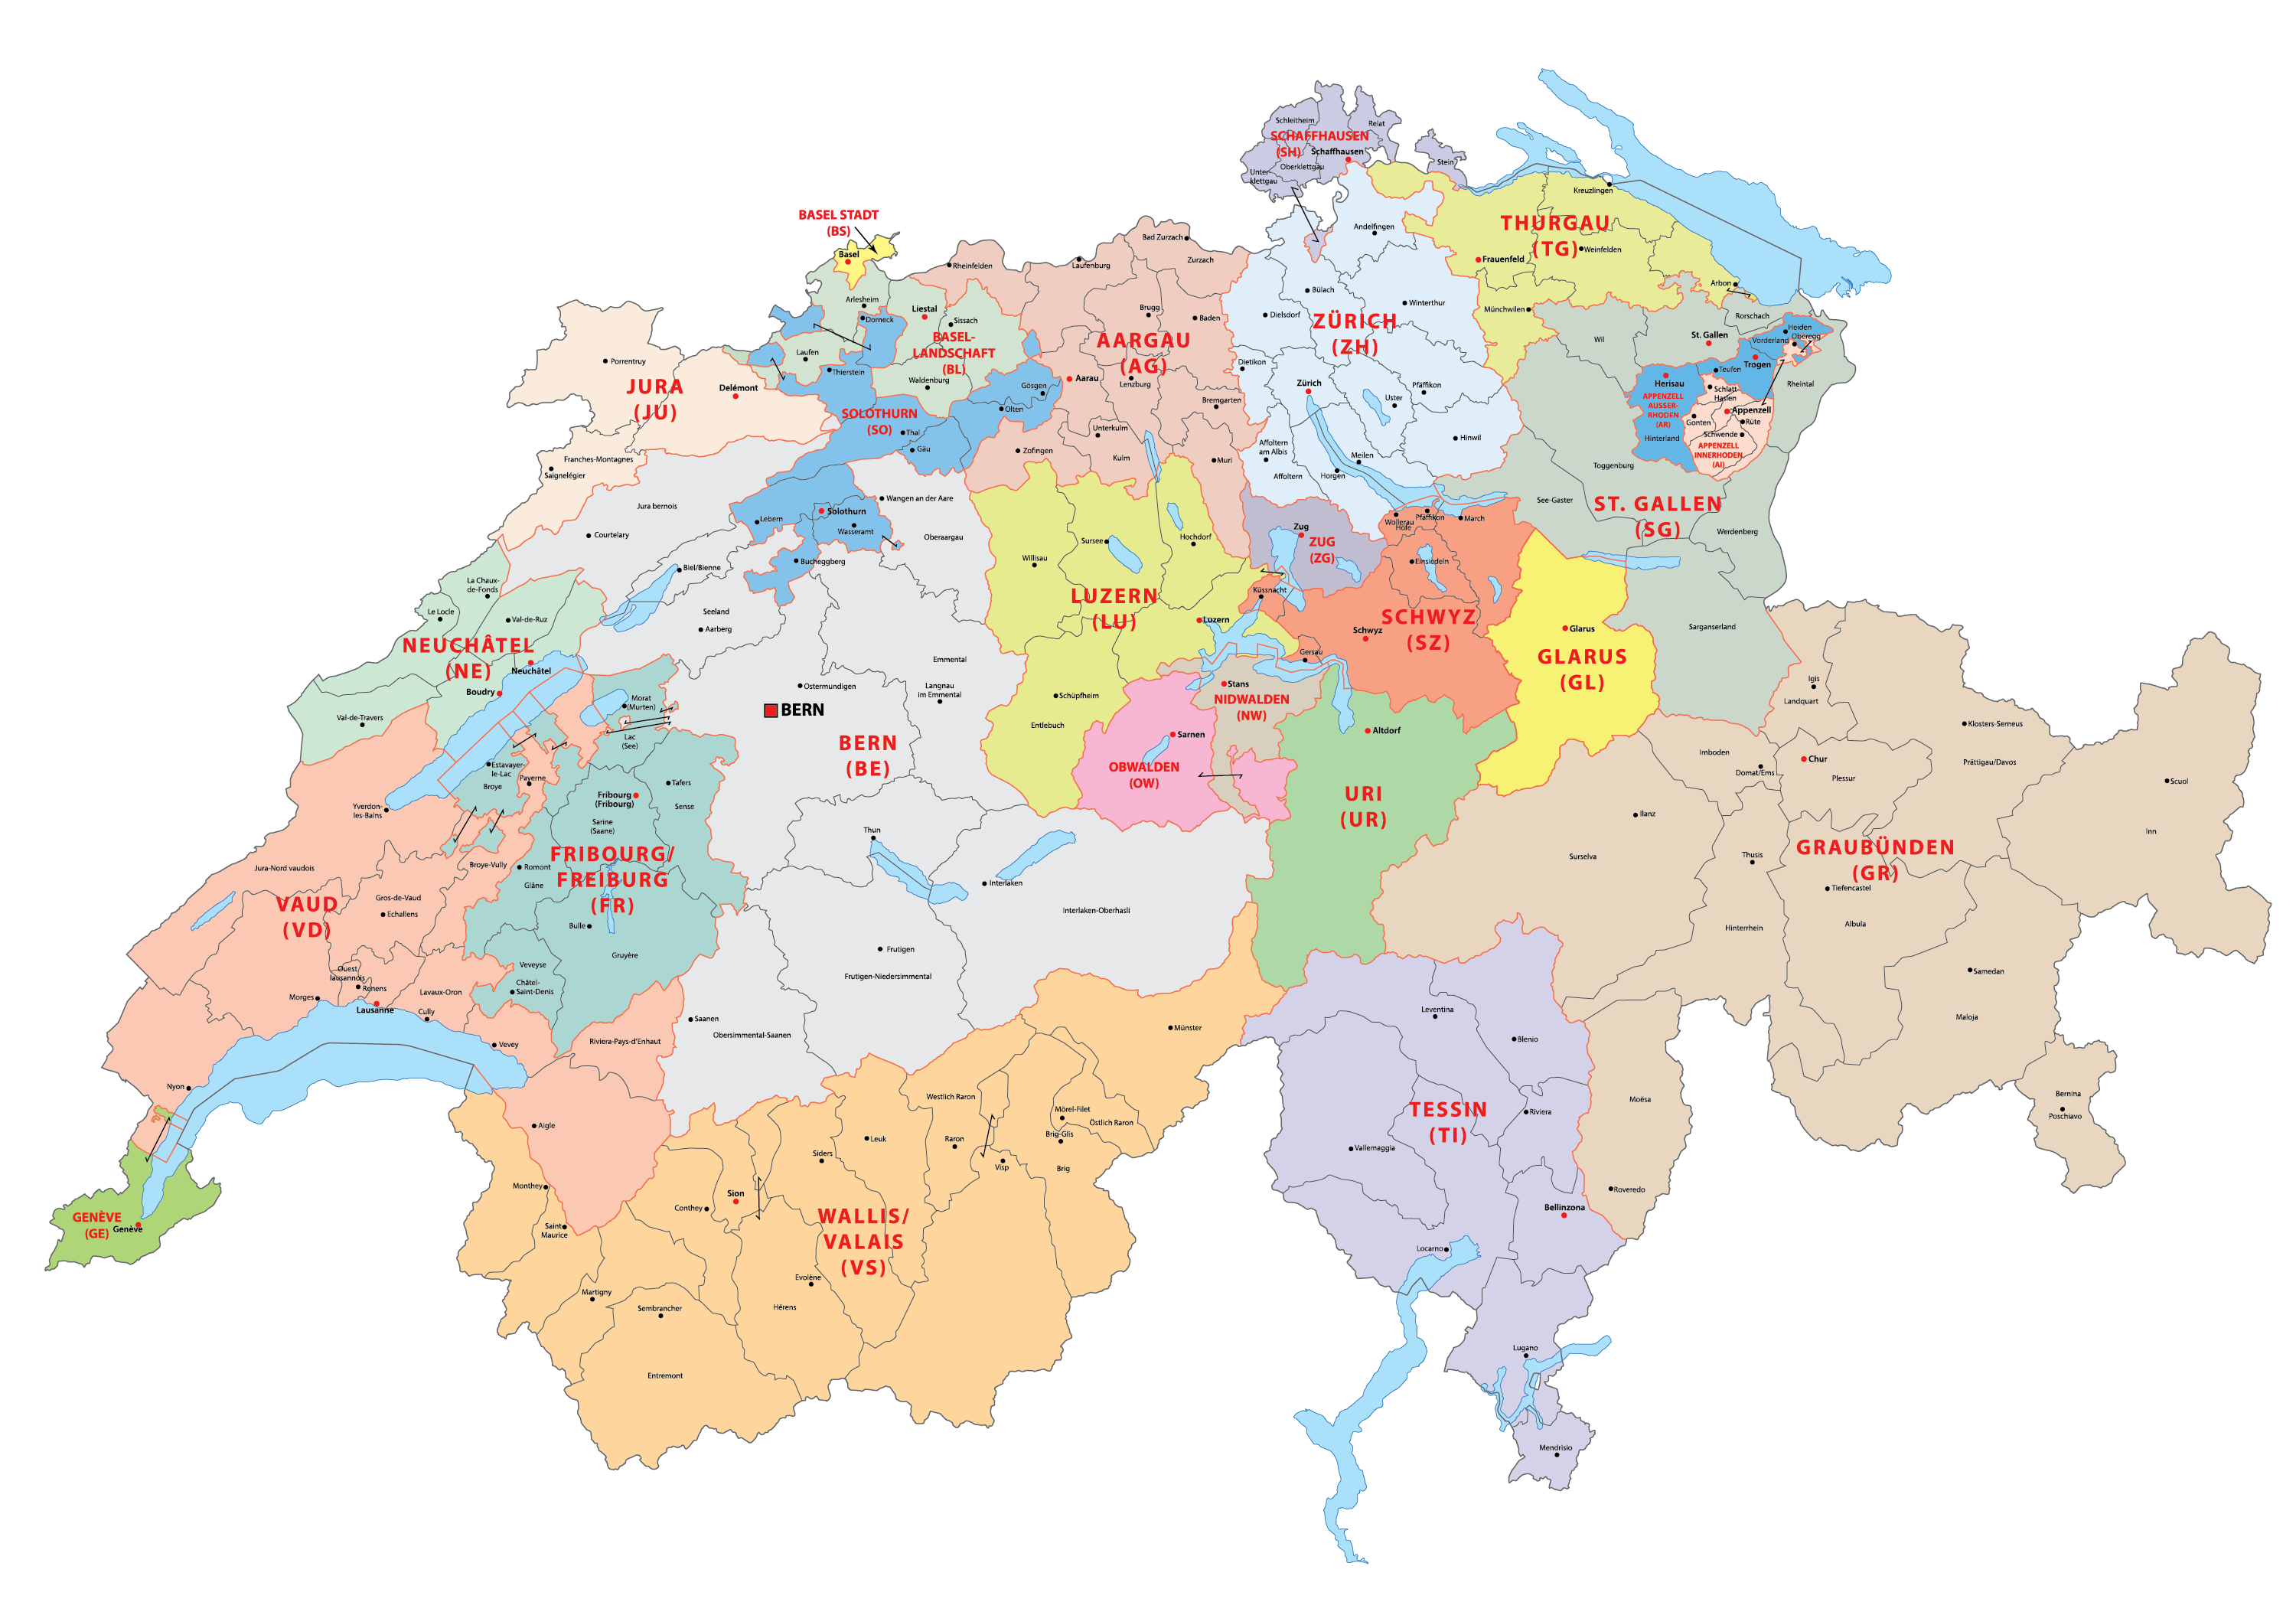 Switzerland maps facts